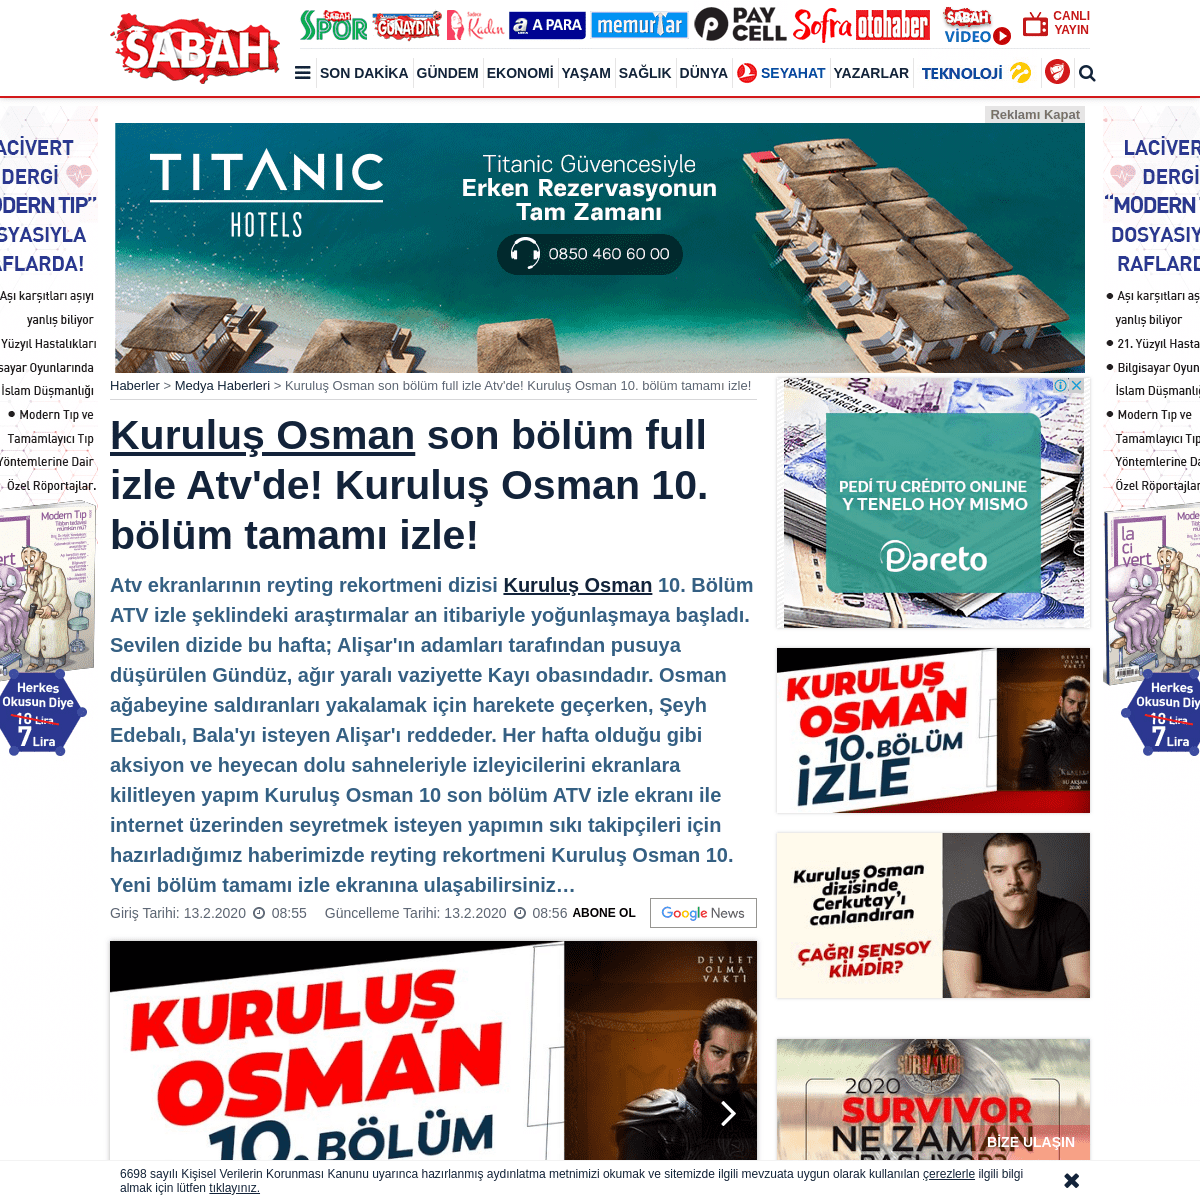 A complete backup of www.sabah.com.tr/medya/2020/02/13/kurulus-osman-10-bolum-atv-canli-izle-kurulus-osman-yeni-bolum-tamami-ful